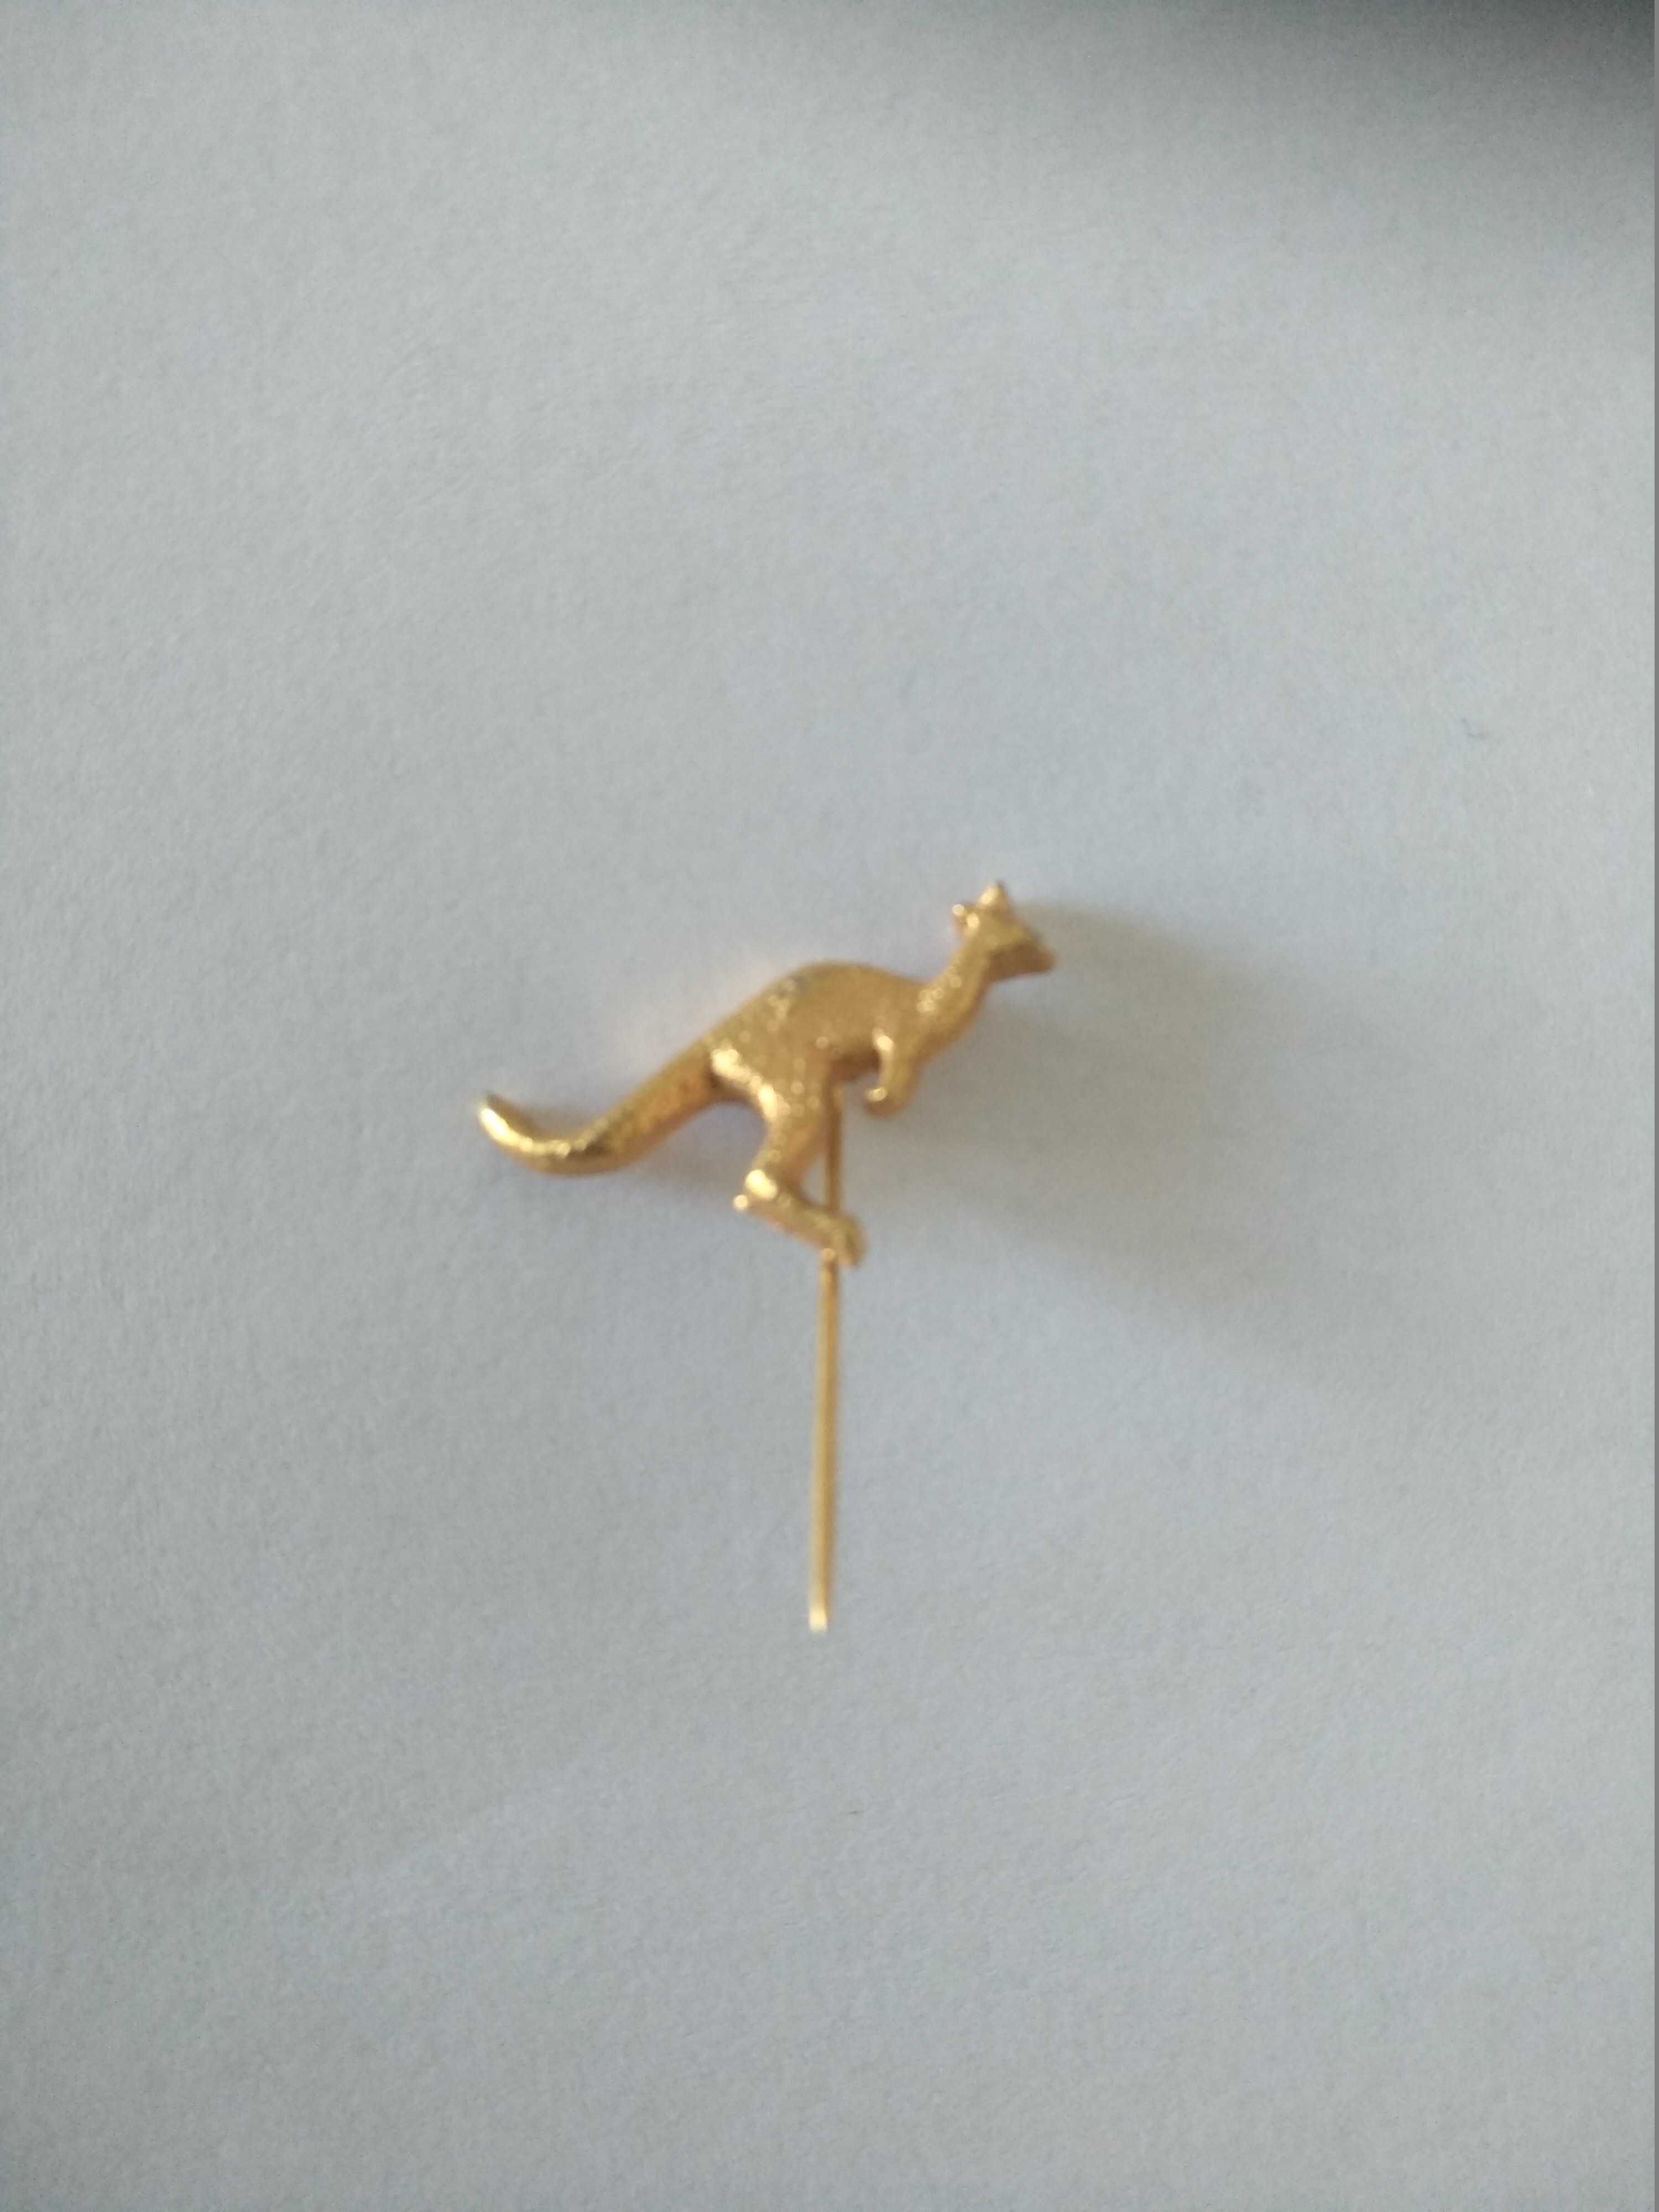 Odznaka kangur (Macropus)